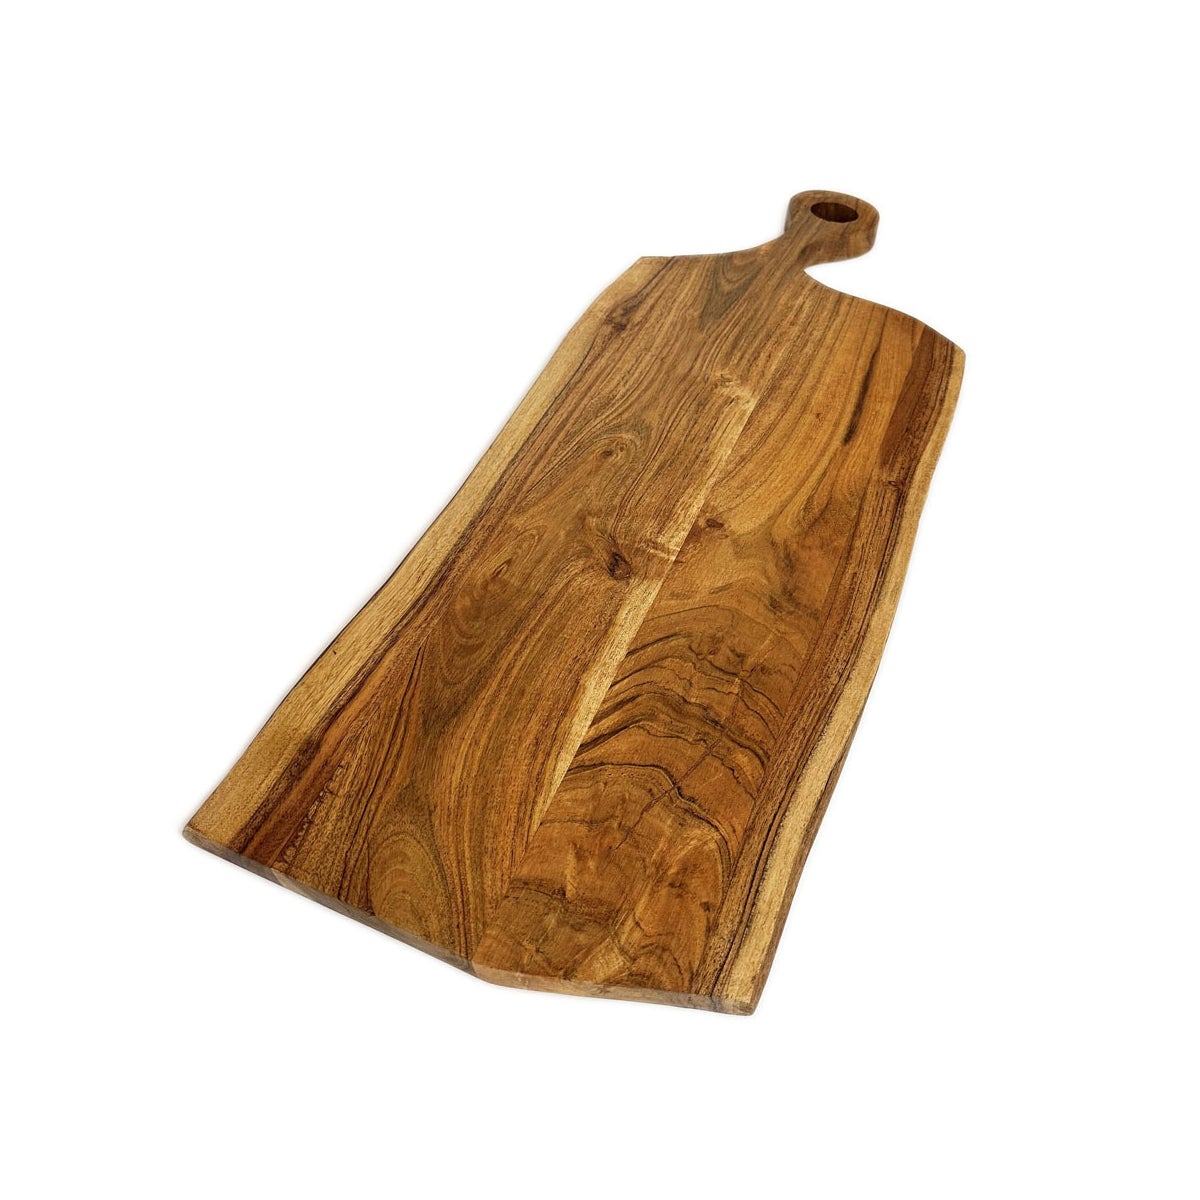 Live Edge Wooden Chopping Board